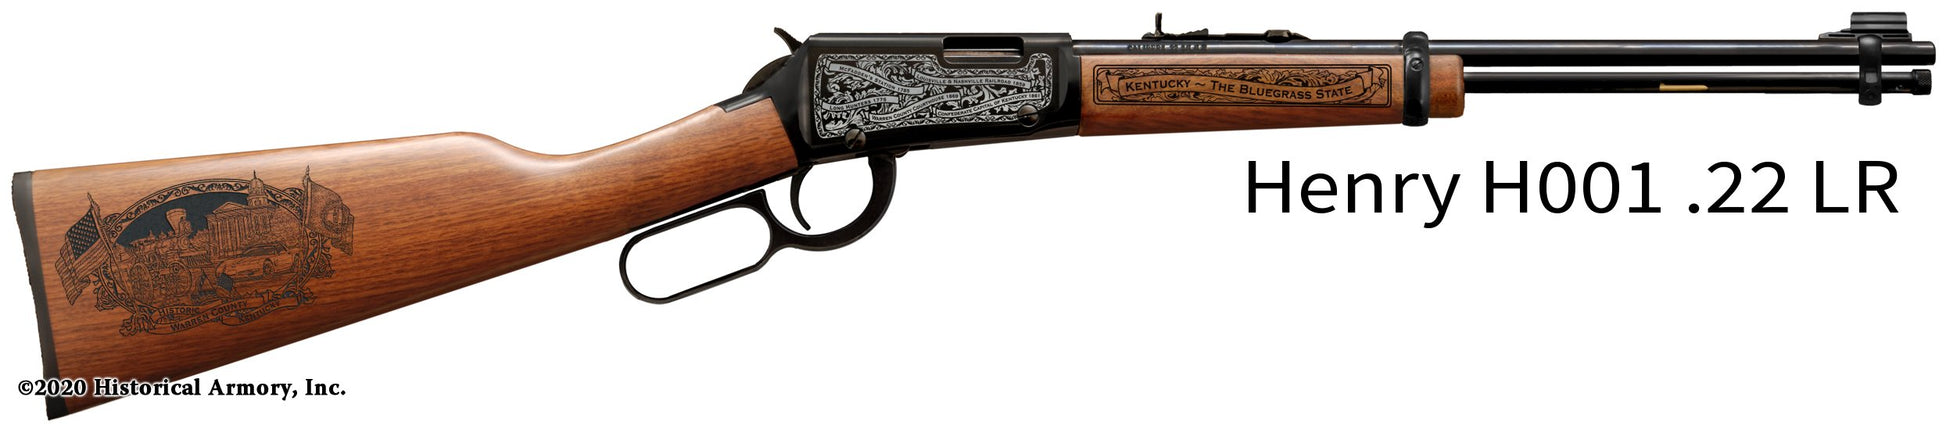 Warren County Kentucky Engraved Henry H001 Rifle